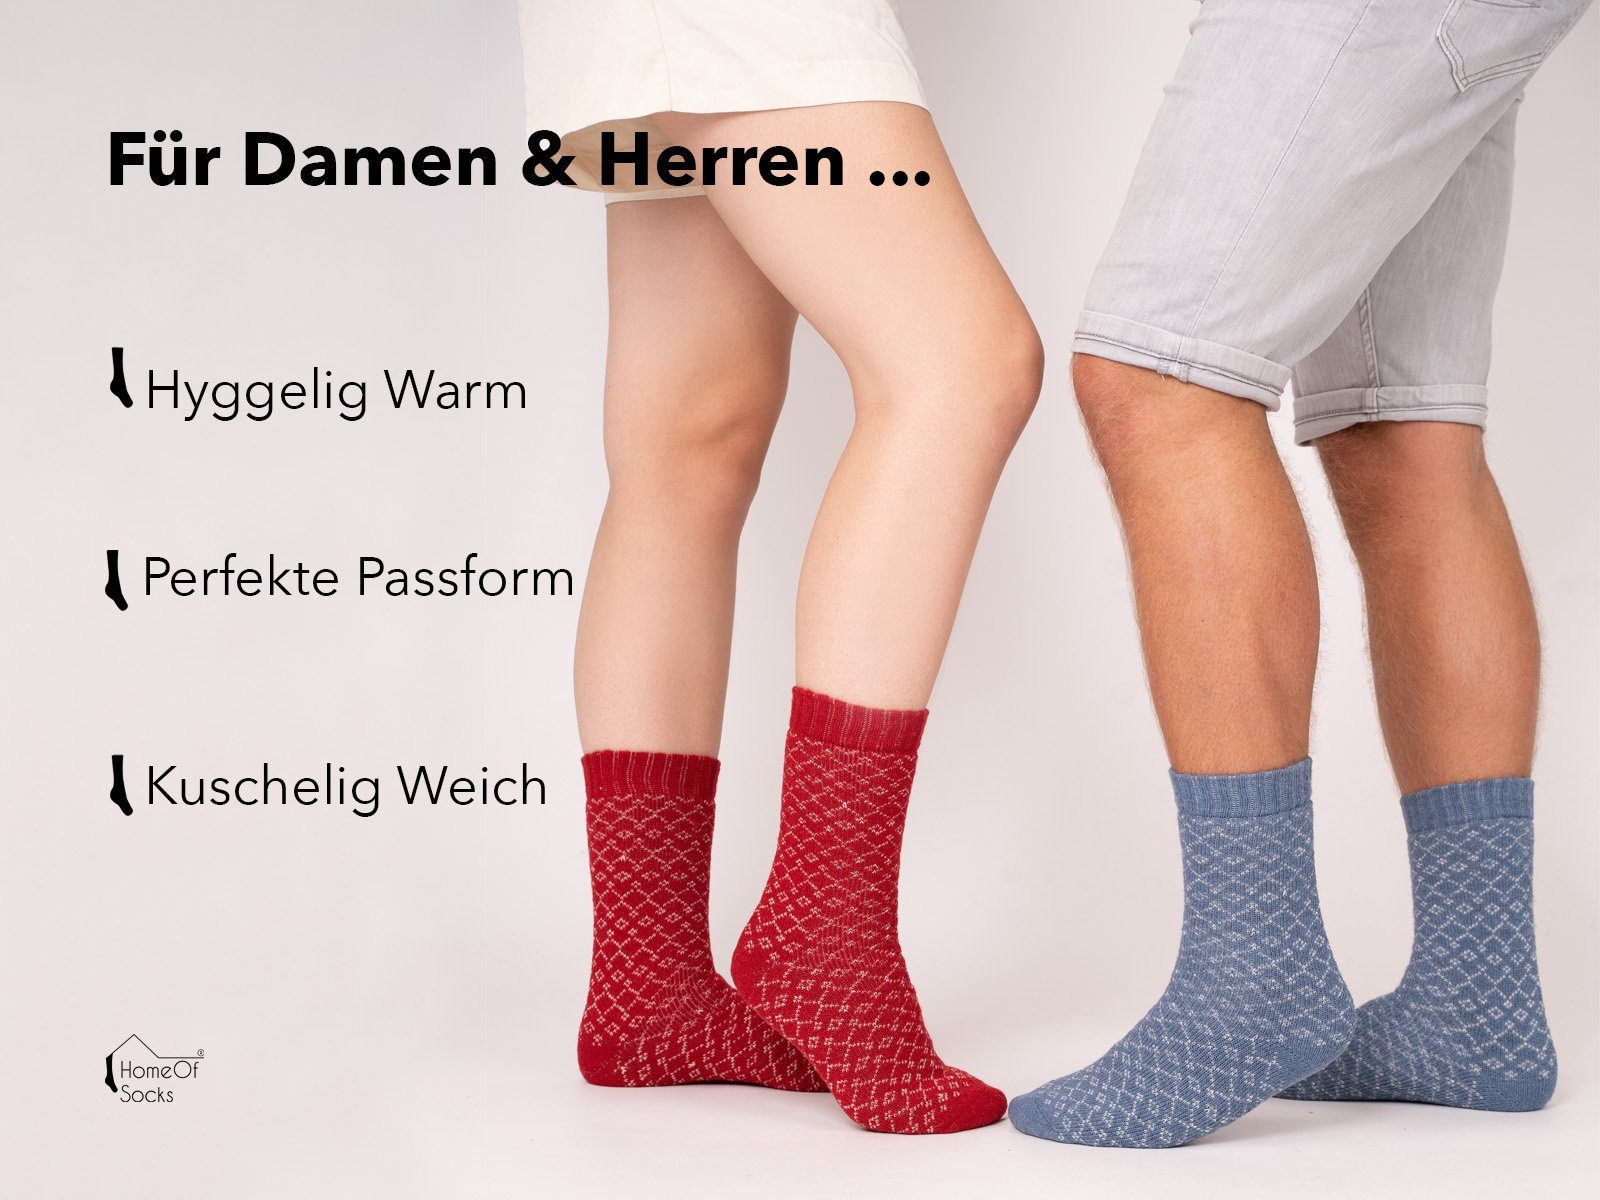 45% Dicke Herren Socken HomeOfSocks & Bunten In Design Mit Warm Wolle Dick Petrol Hygge Socken mit Hohem Socken Damen Hyggelig Für Wollanteil